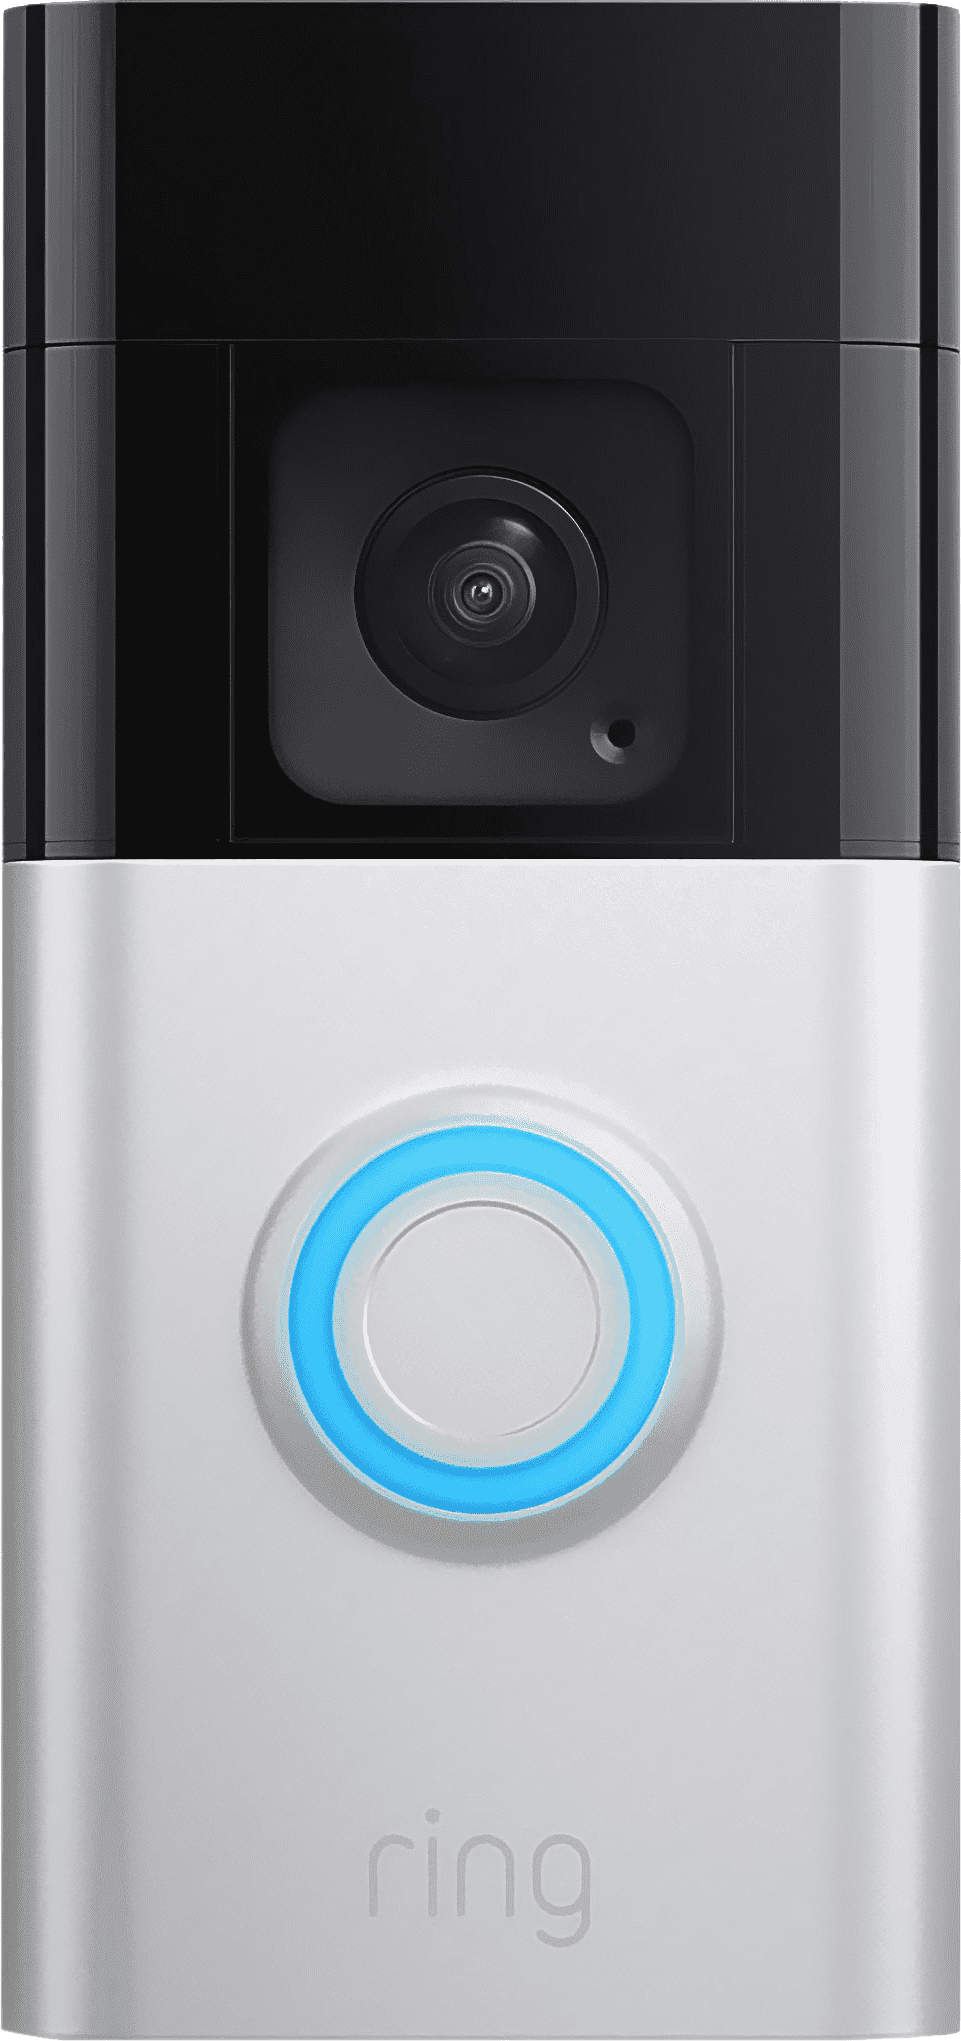 Ring Battery Video Doorbell Plus Smart Doorbell - Nickel, Aluminium